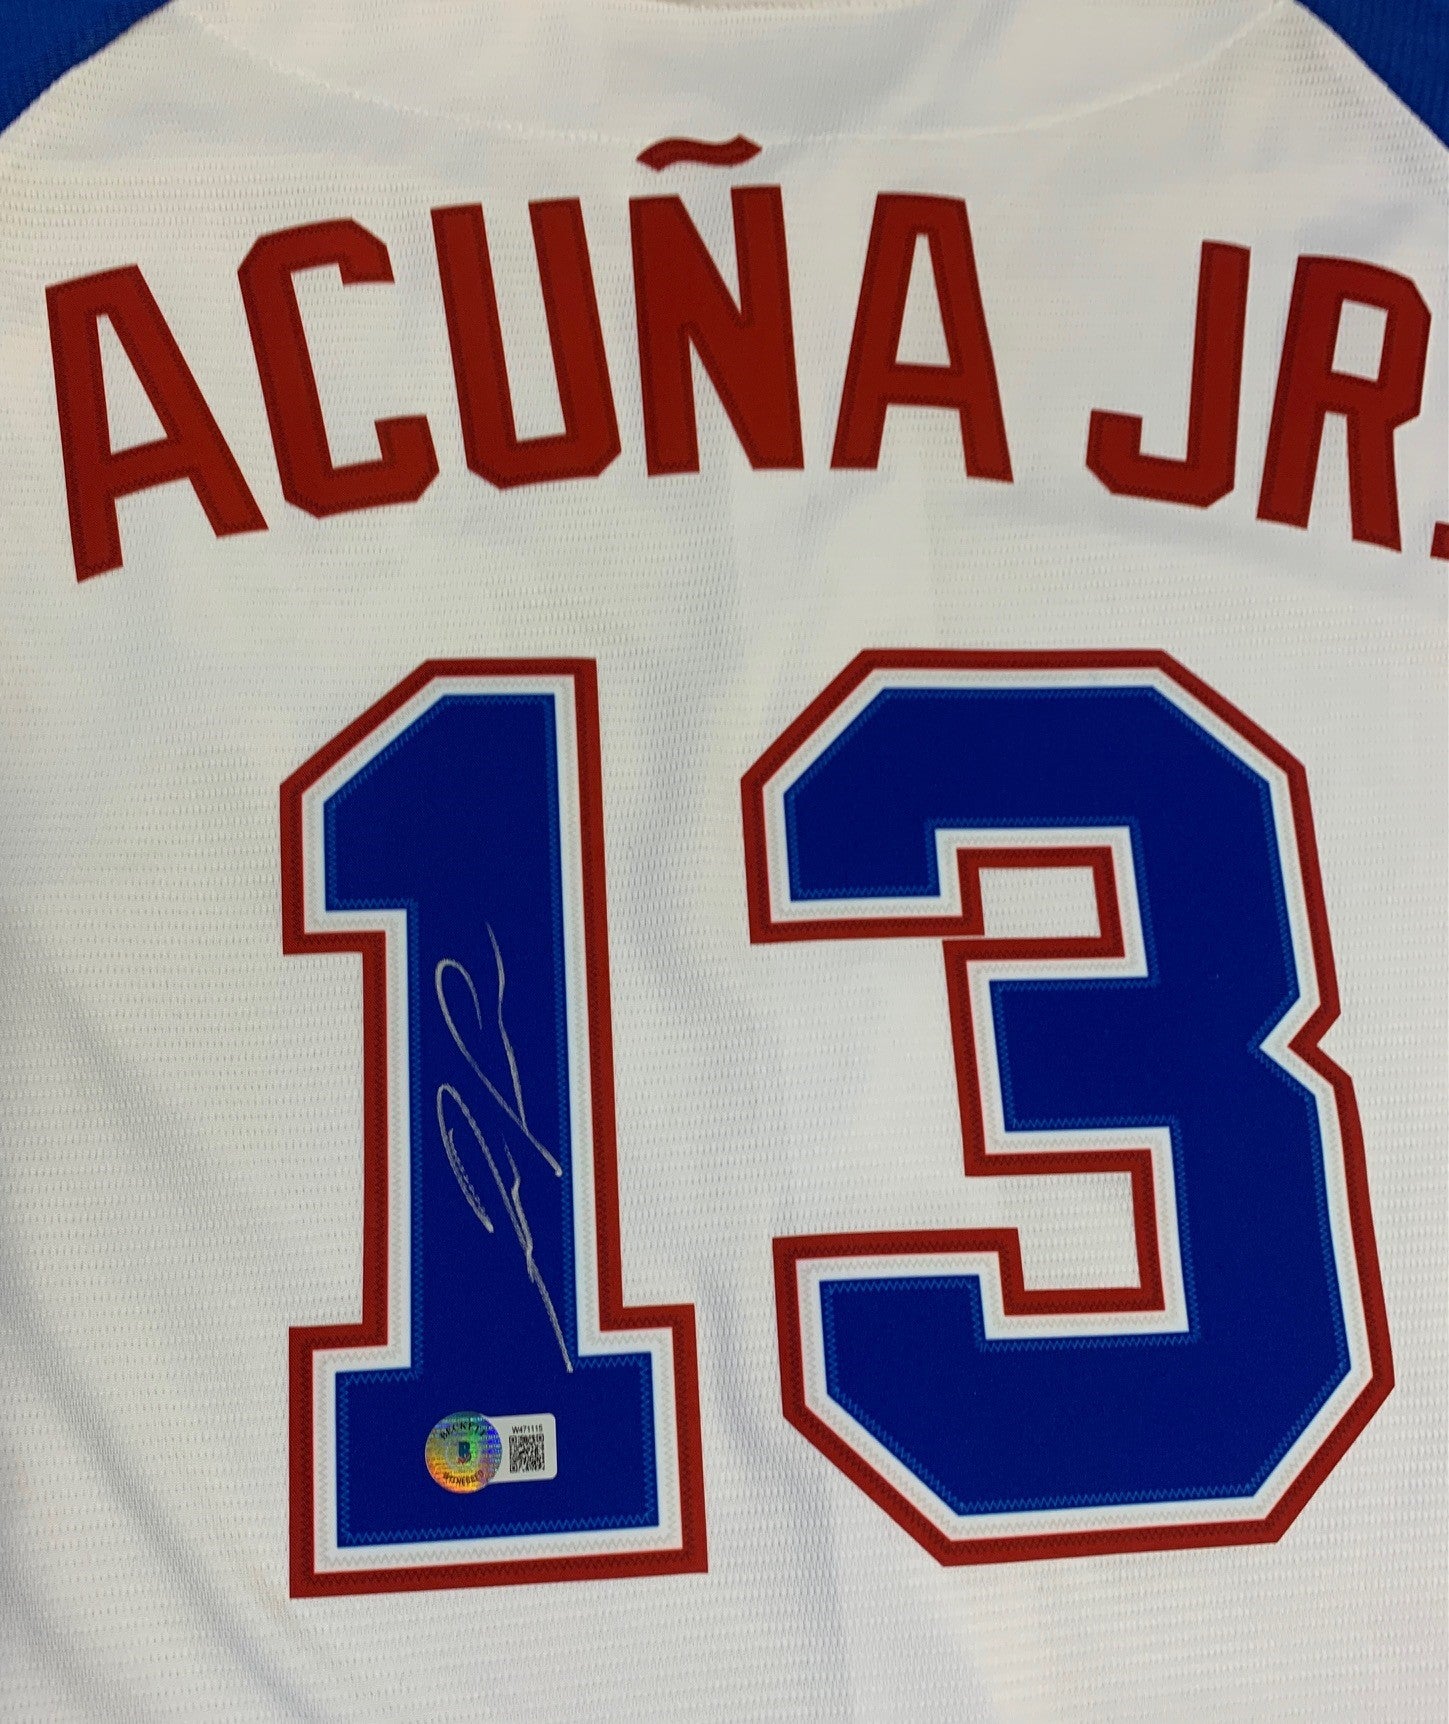 Ronald Acuna Jr Autographed Atlanta Braves Nike City Connect Signed Baseball Jersey Beckett COA-Powers Sports Memorabilia